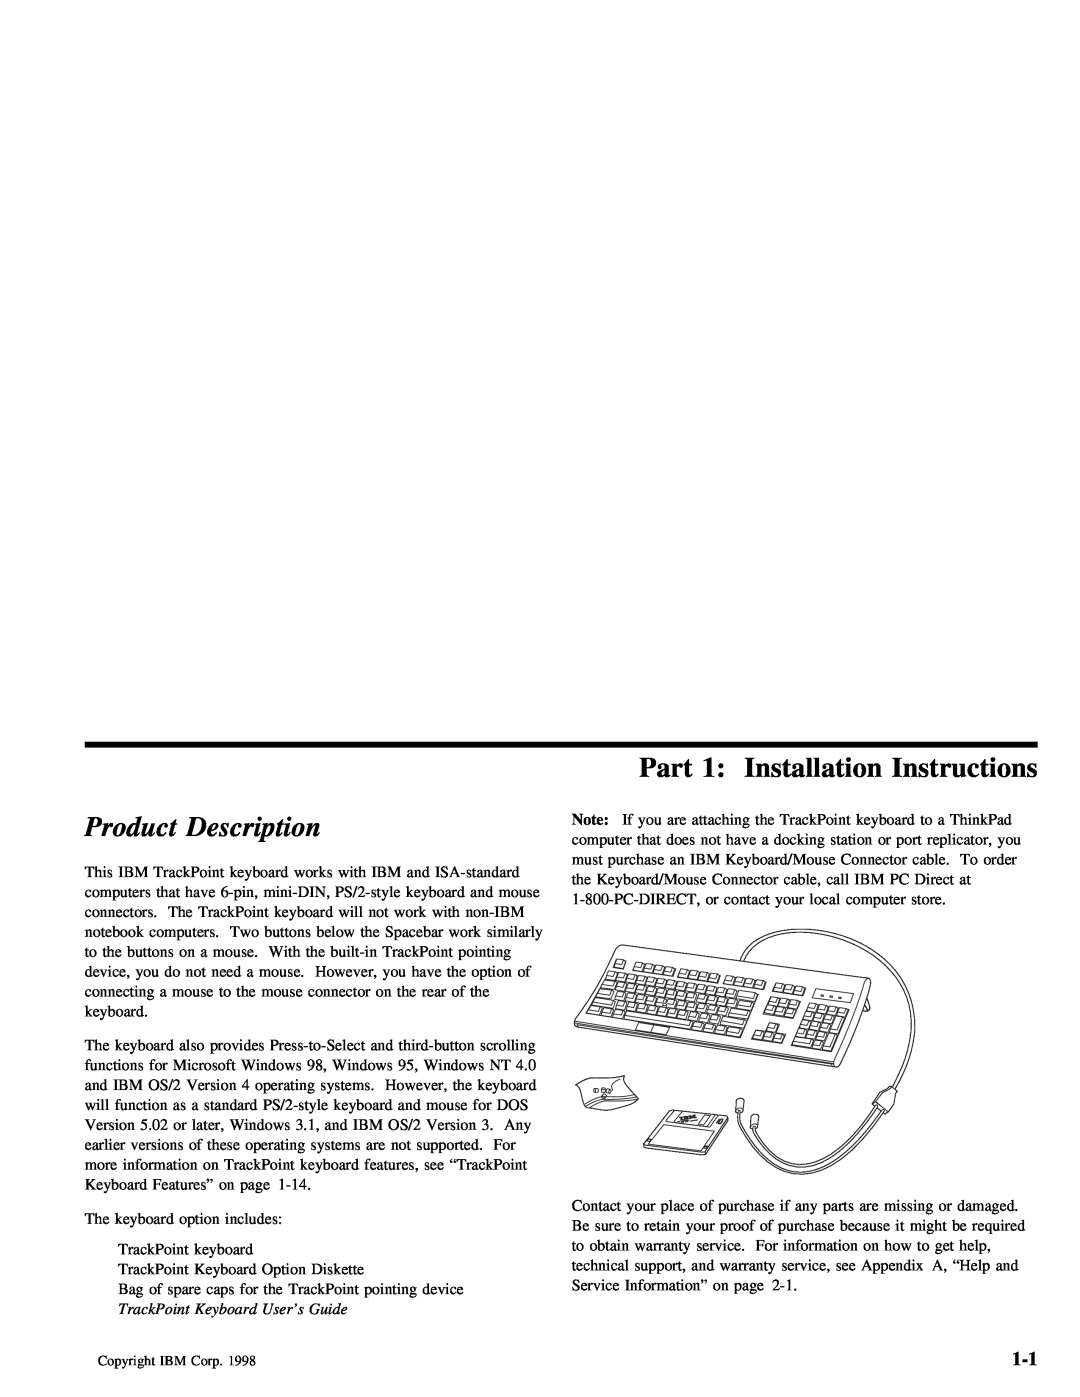 IBM Partner Pavilion TrackPoint manual Part, Description, User’s, Product, Installation Instructions 